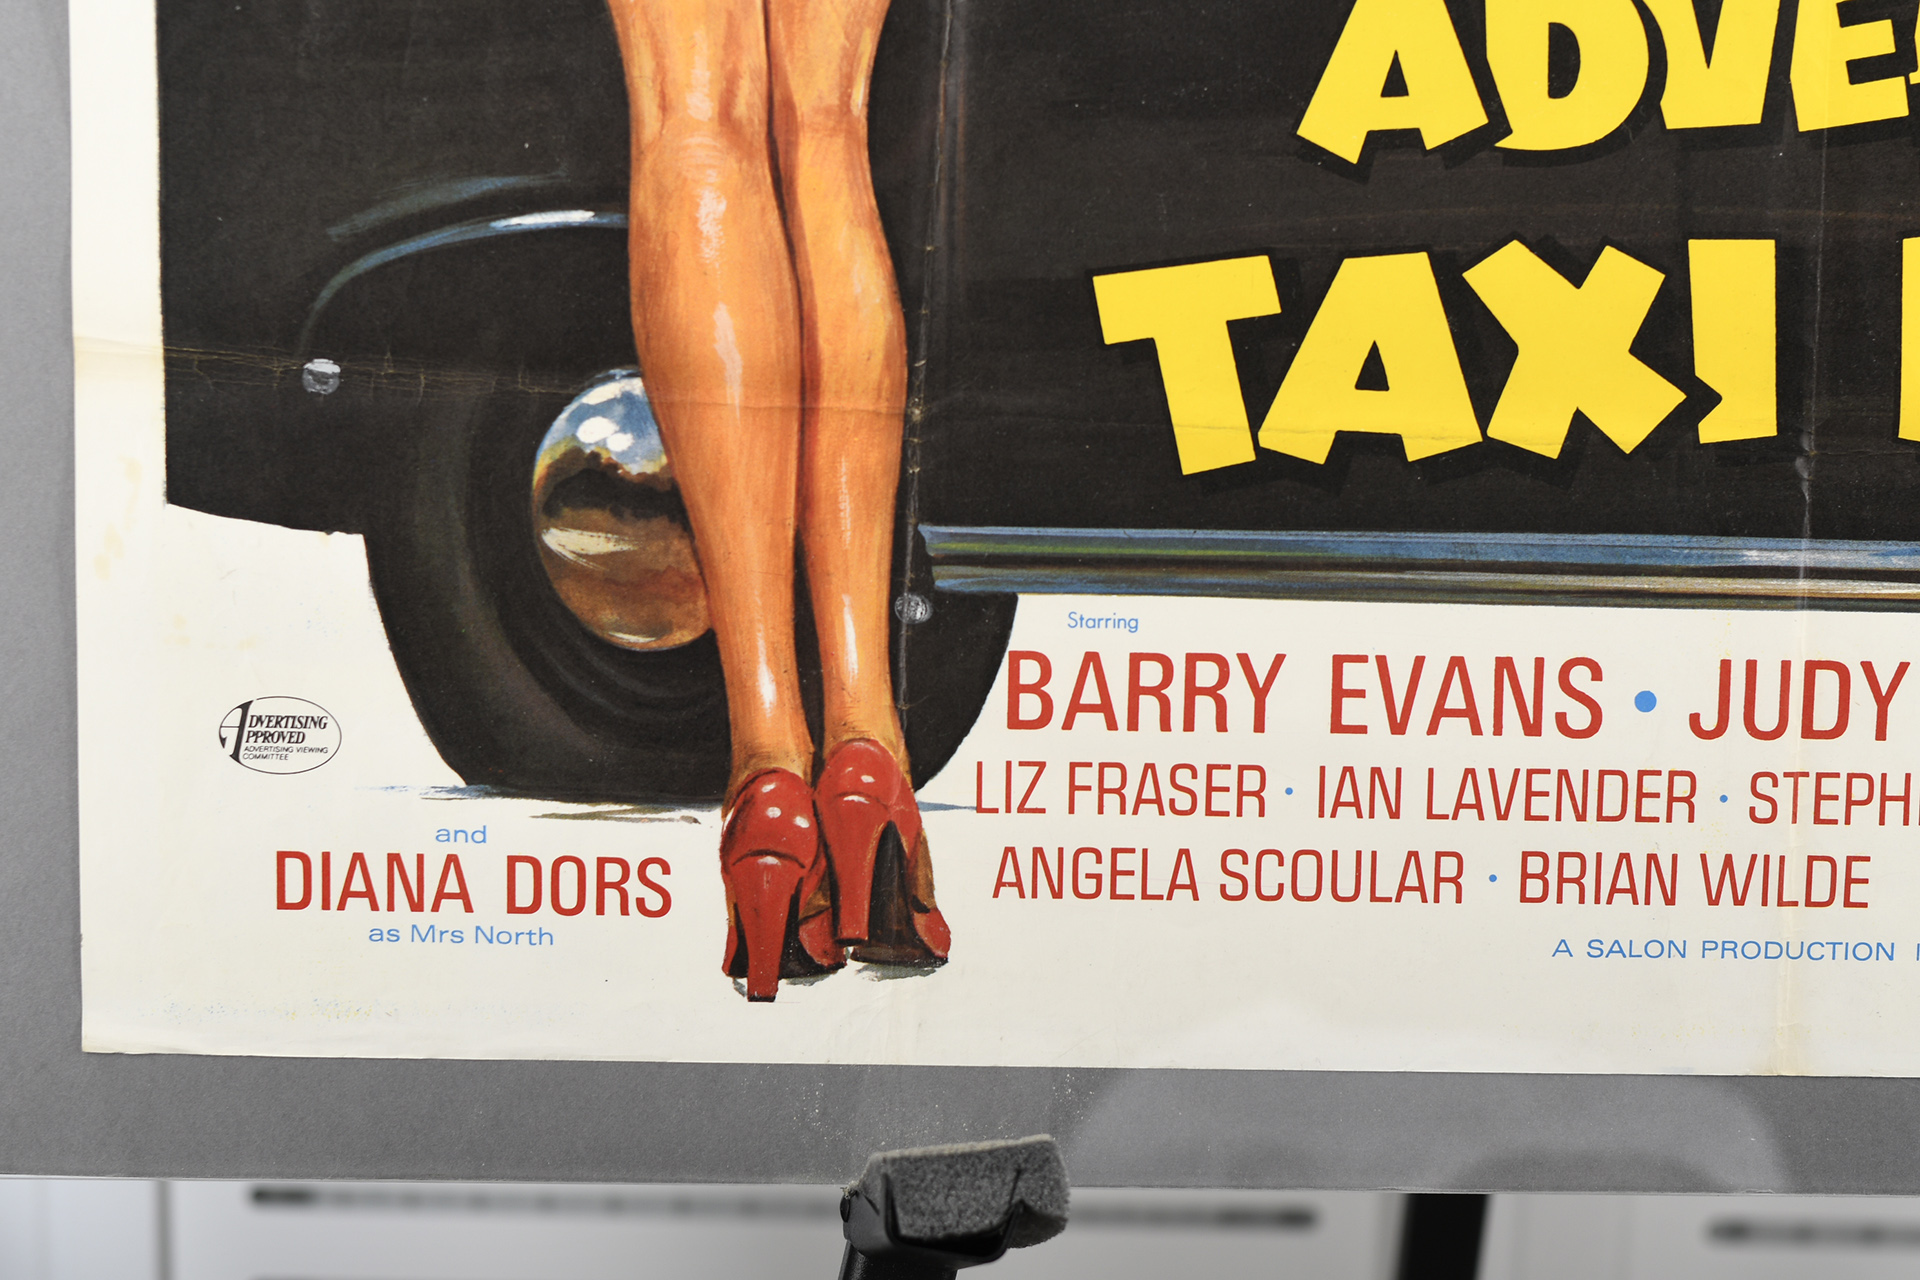 Original "Adventures of a Taxi Driver" Film Poster